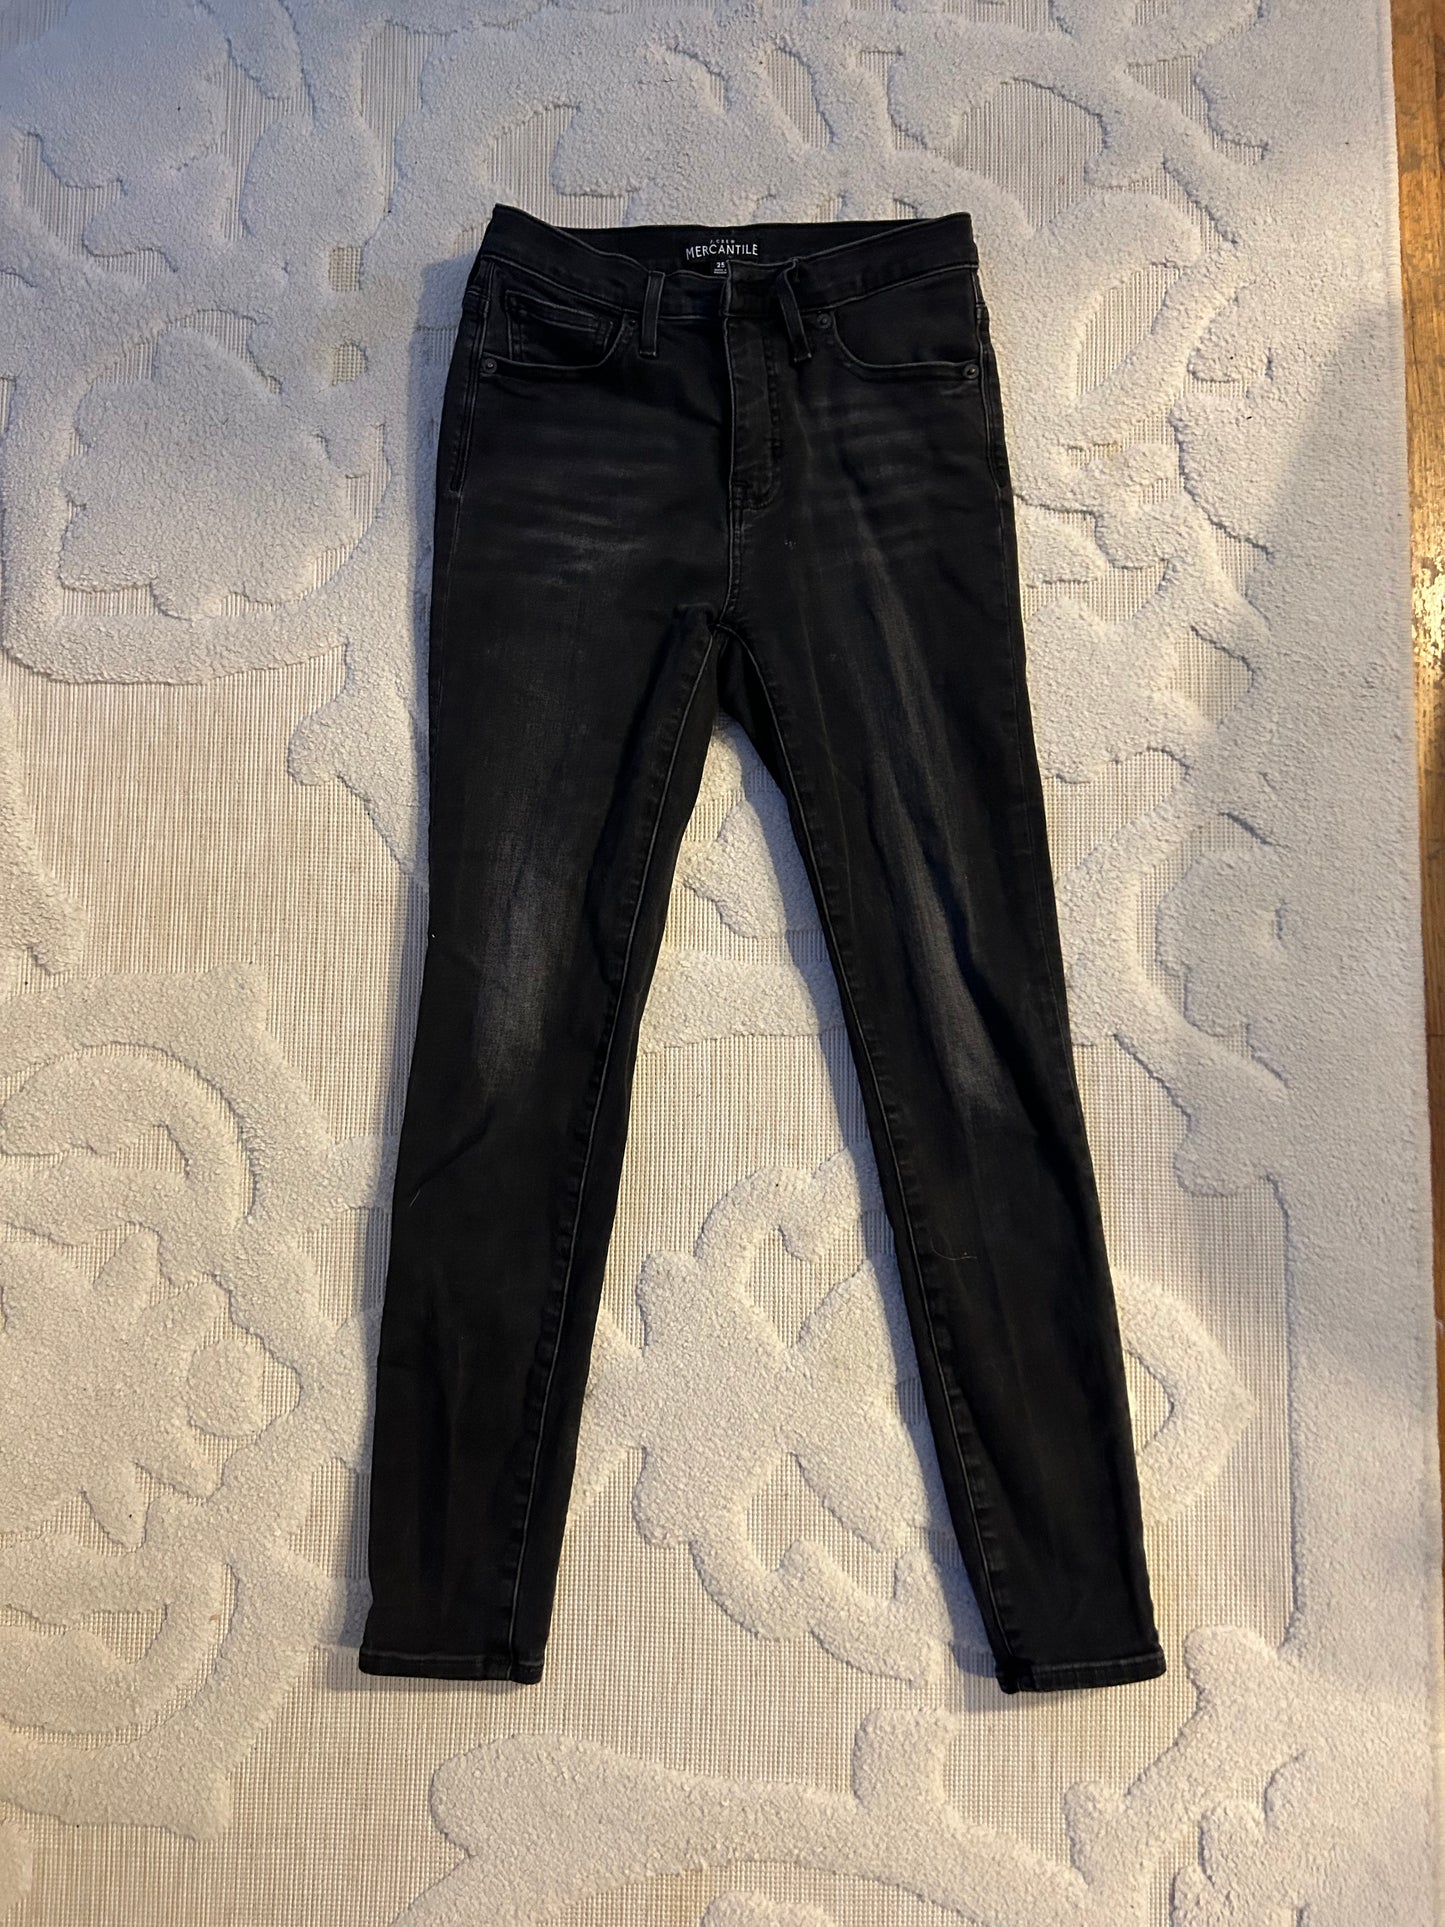 REDUCED Jcrew Mercantile Black Skinny Jean 25/0